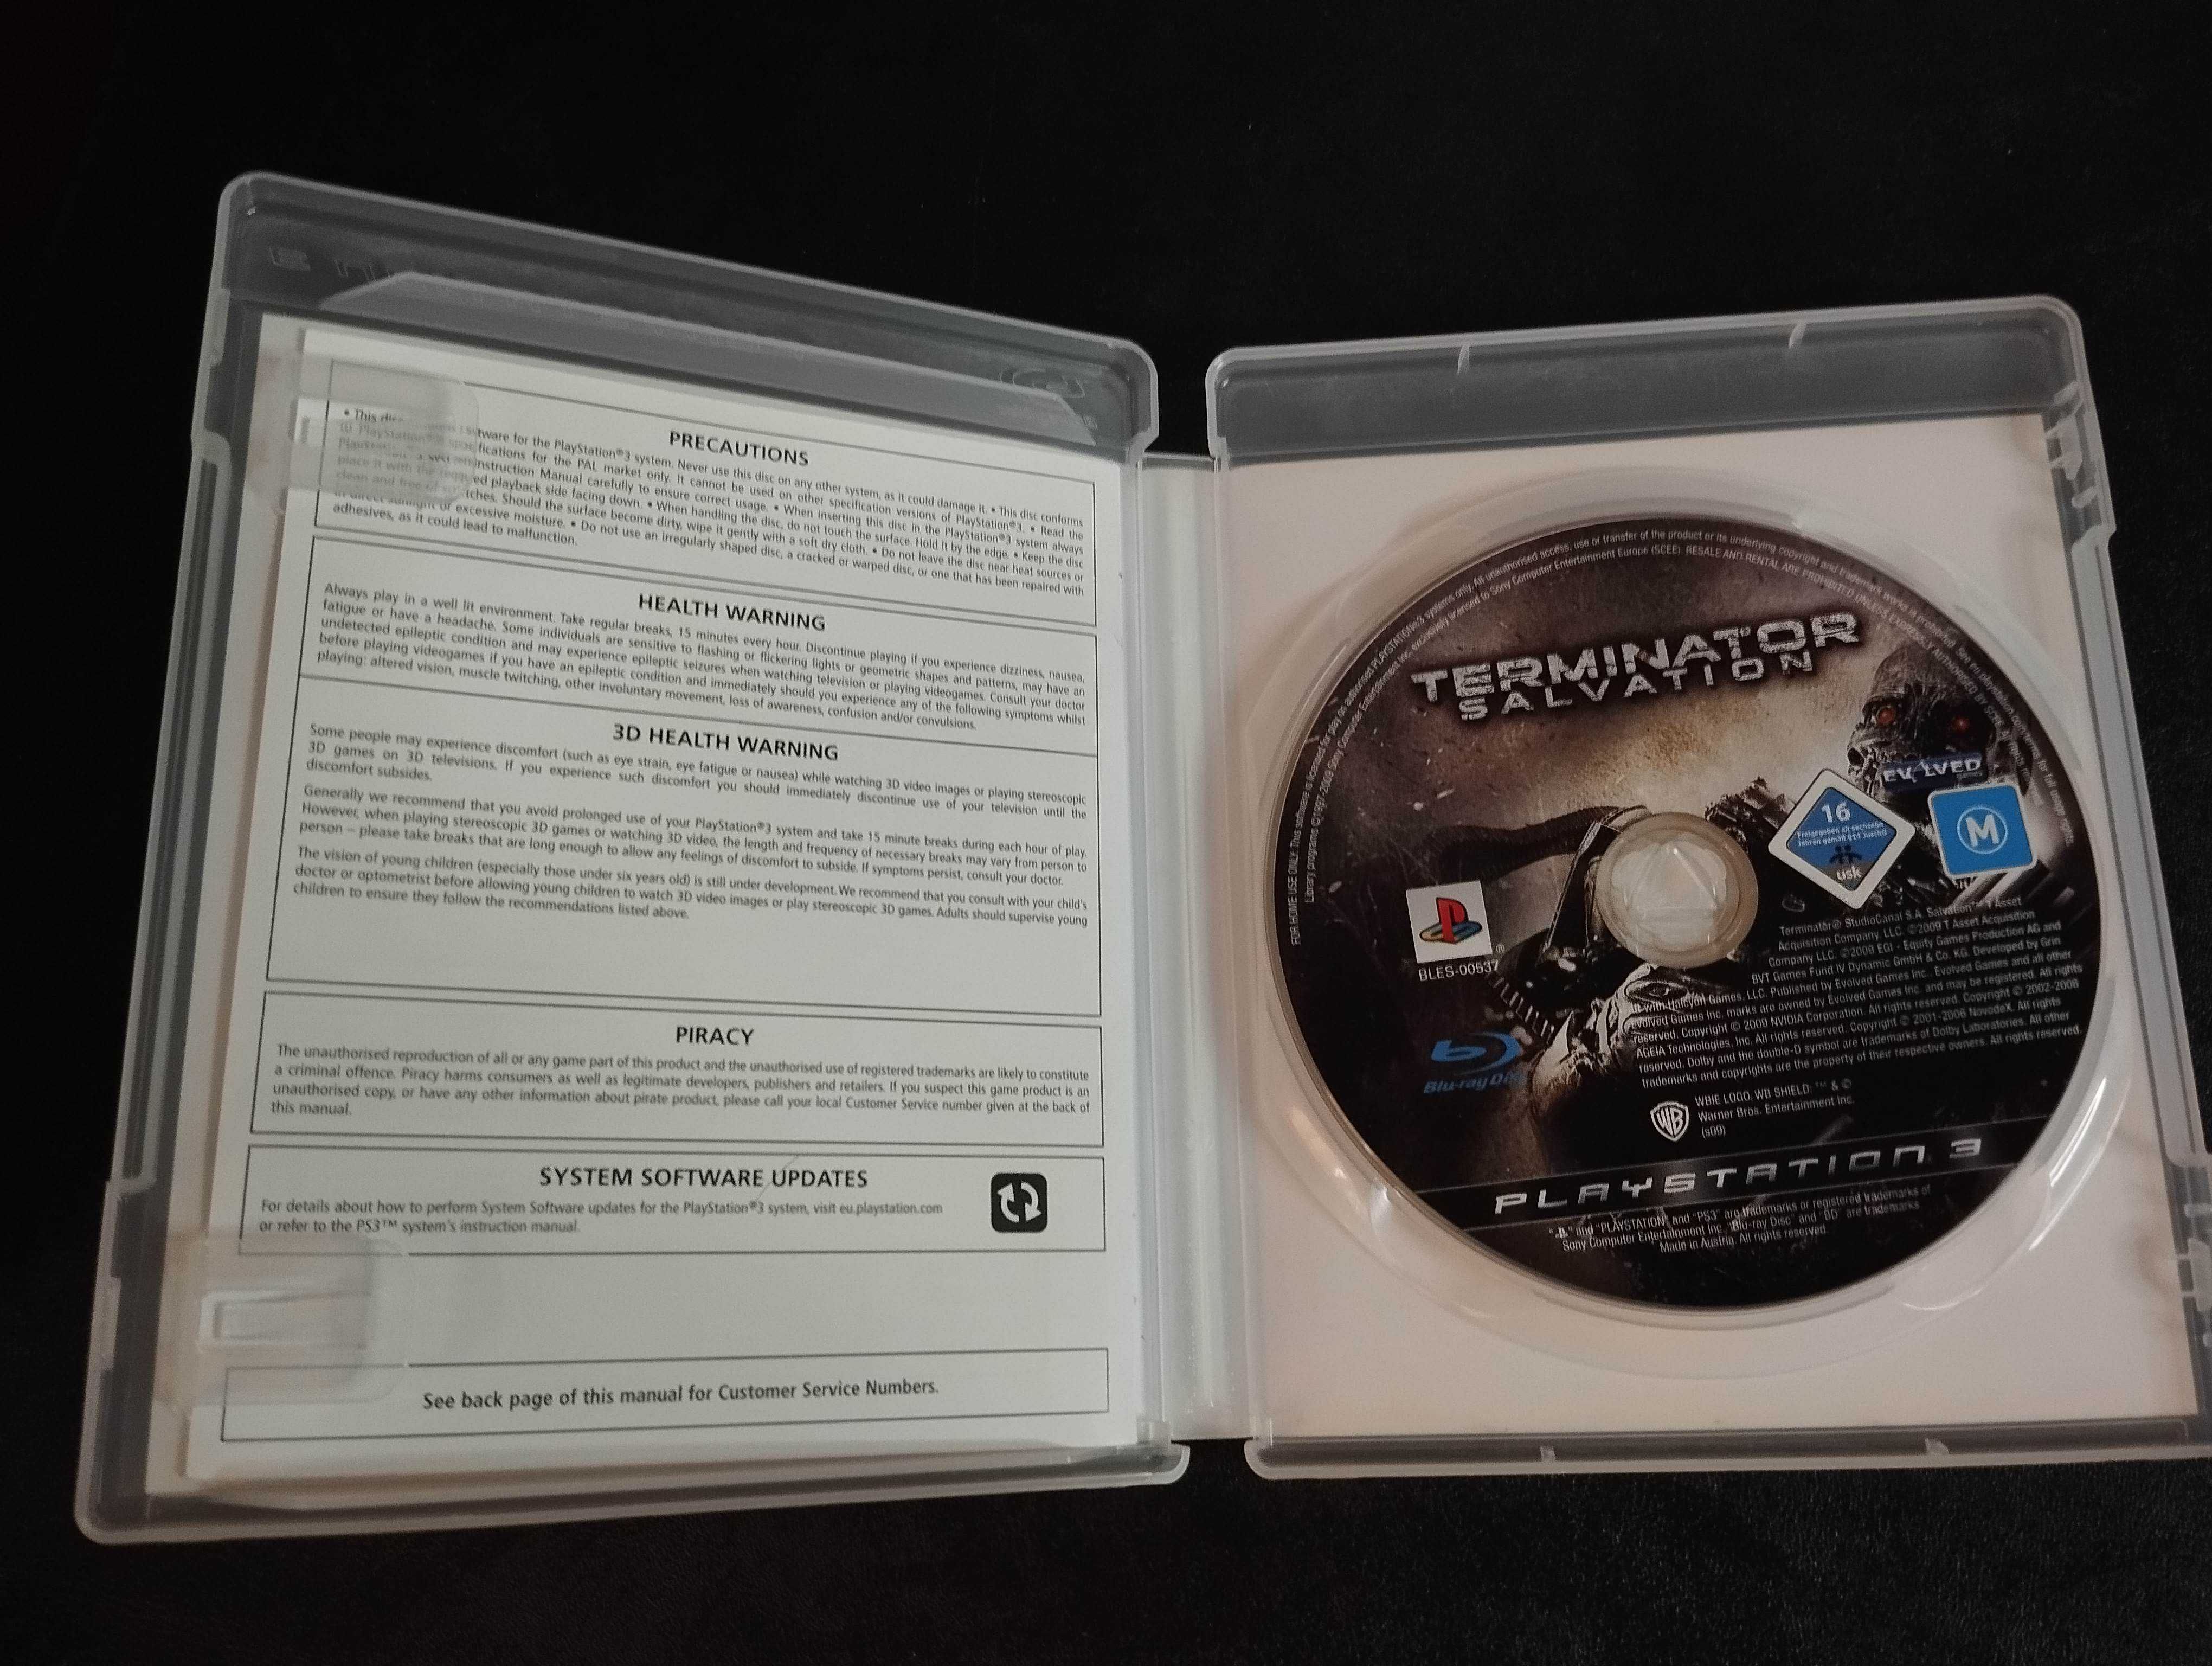 Terminator Salvation - PS3 - duży wybór gier PlayStation